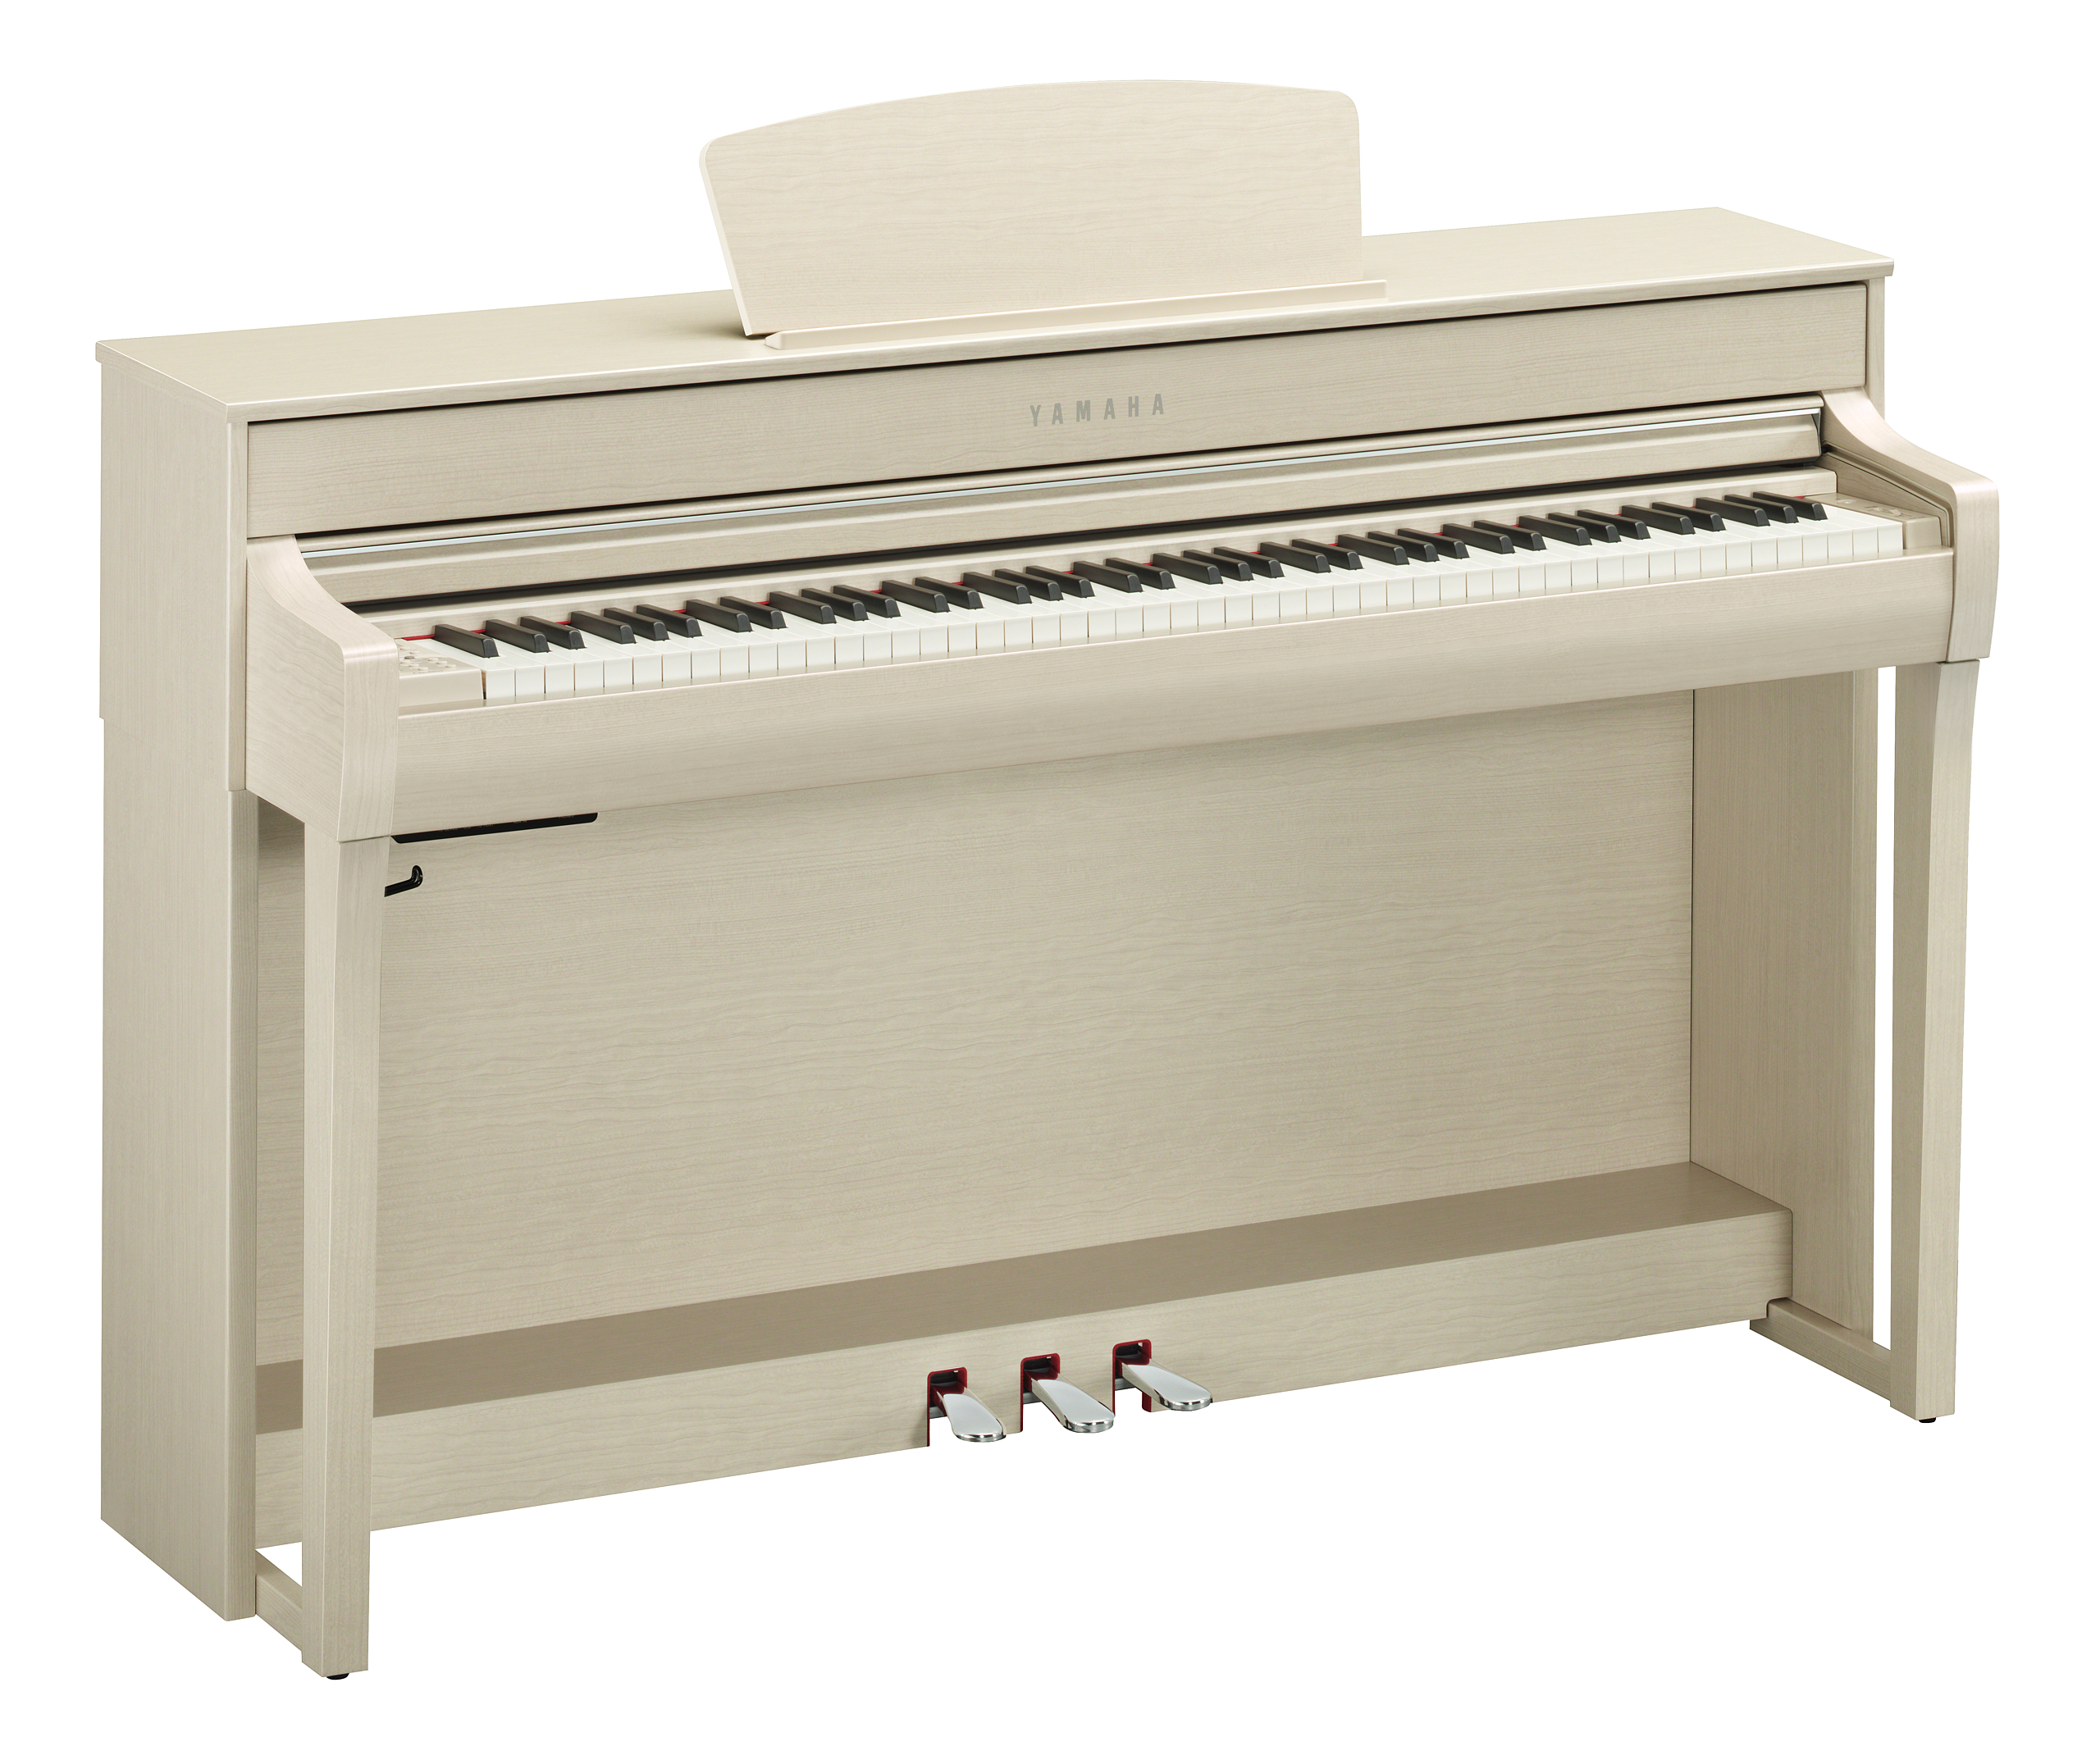 Yamaha Clp735wa - Piano digital con mueble - Variation 1